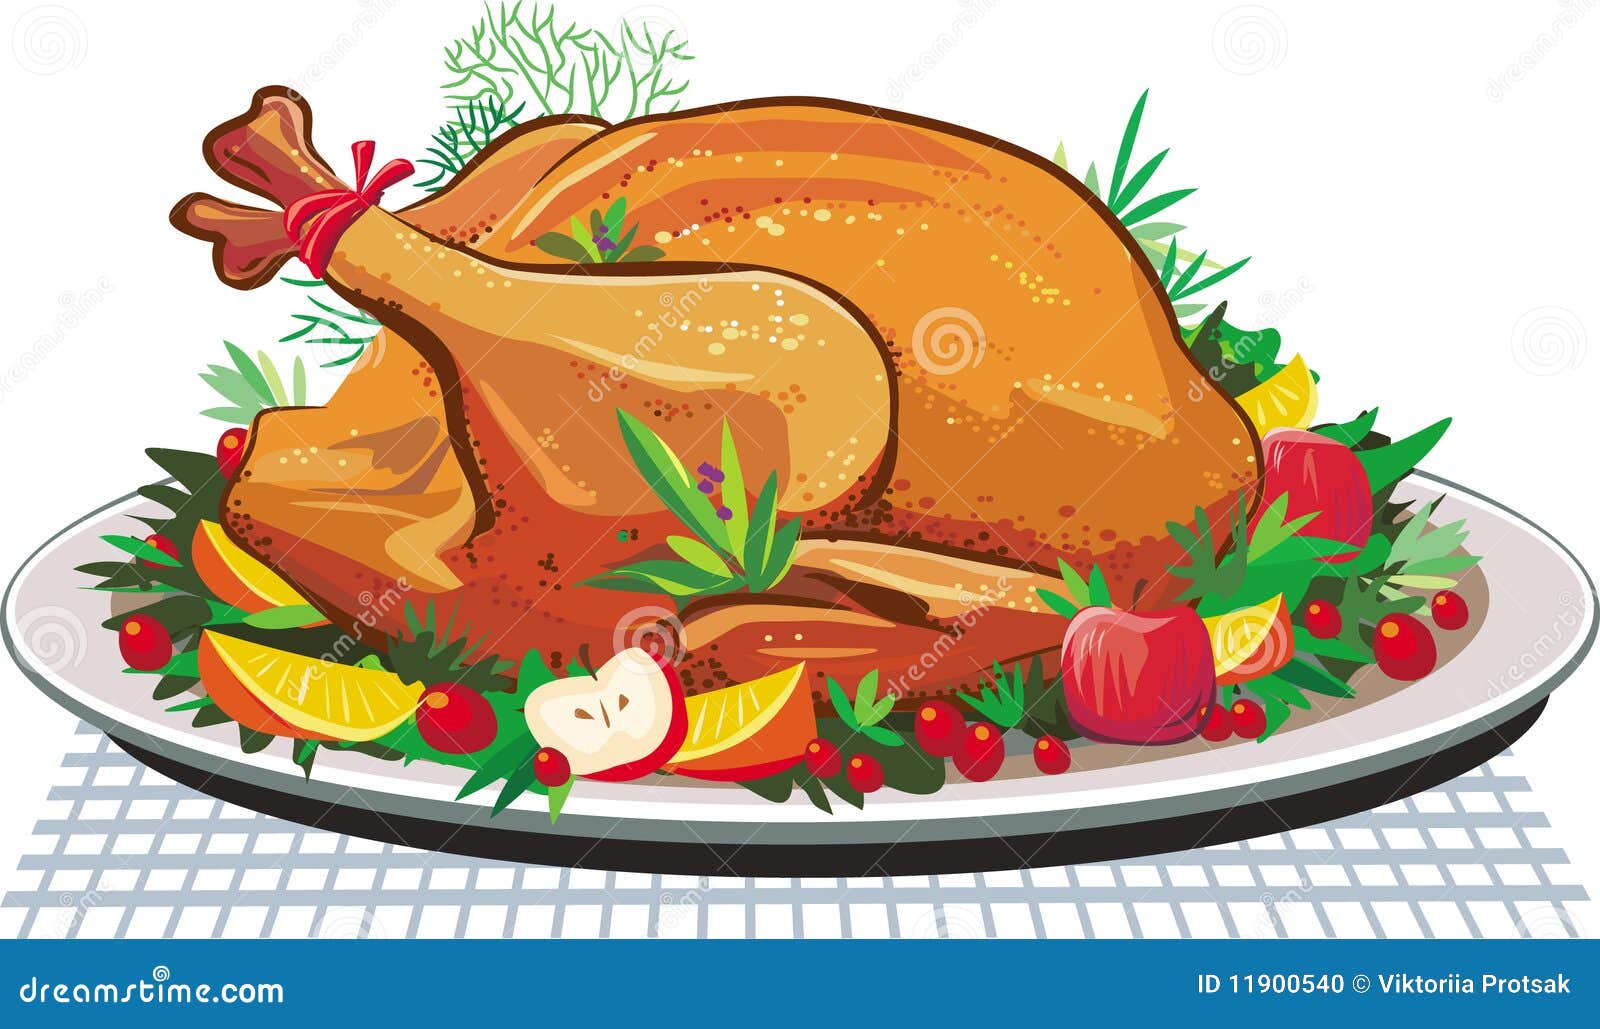 Roast turkey on the plate stock vector. Illustration of feast - 11900540